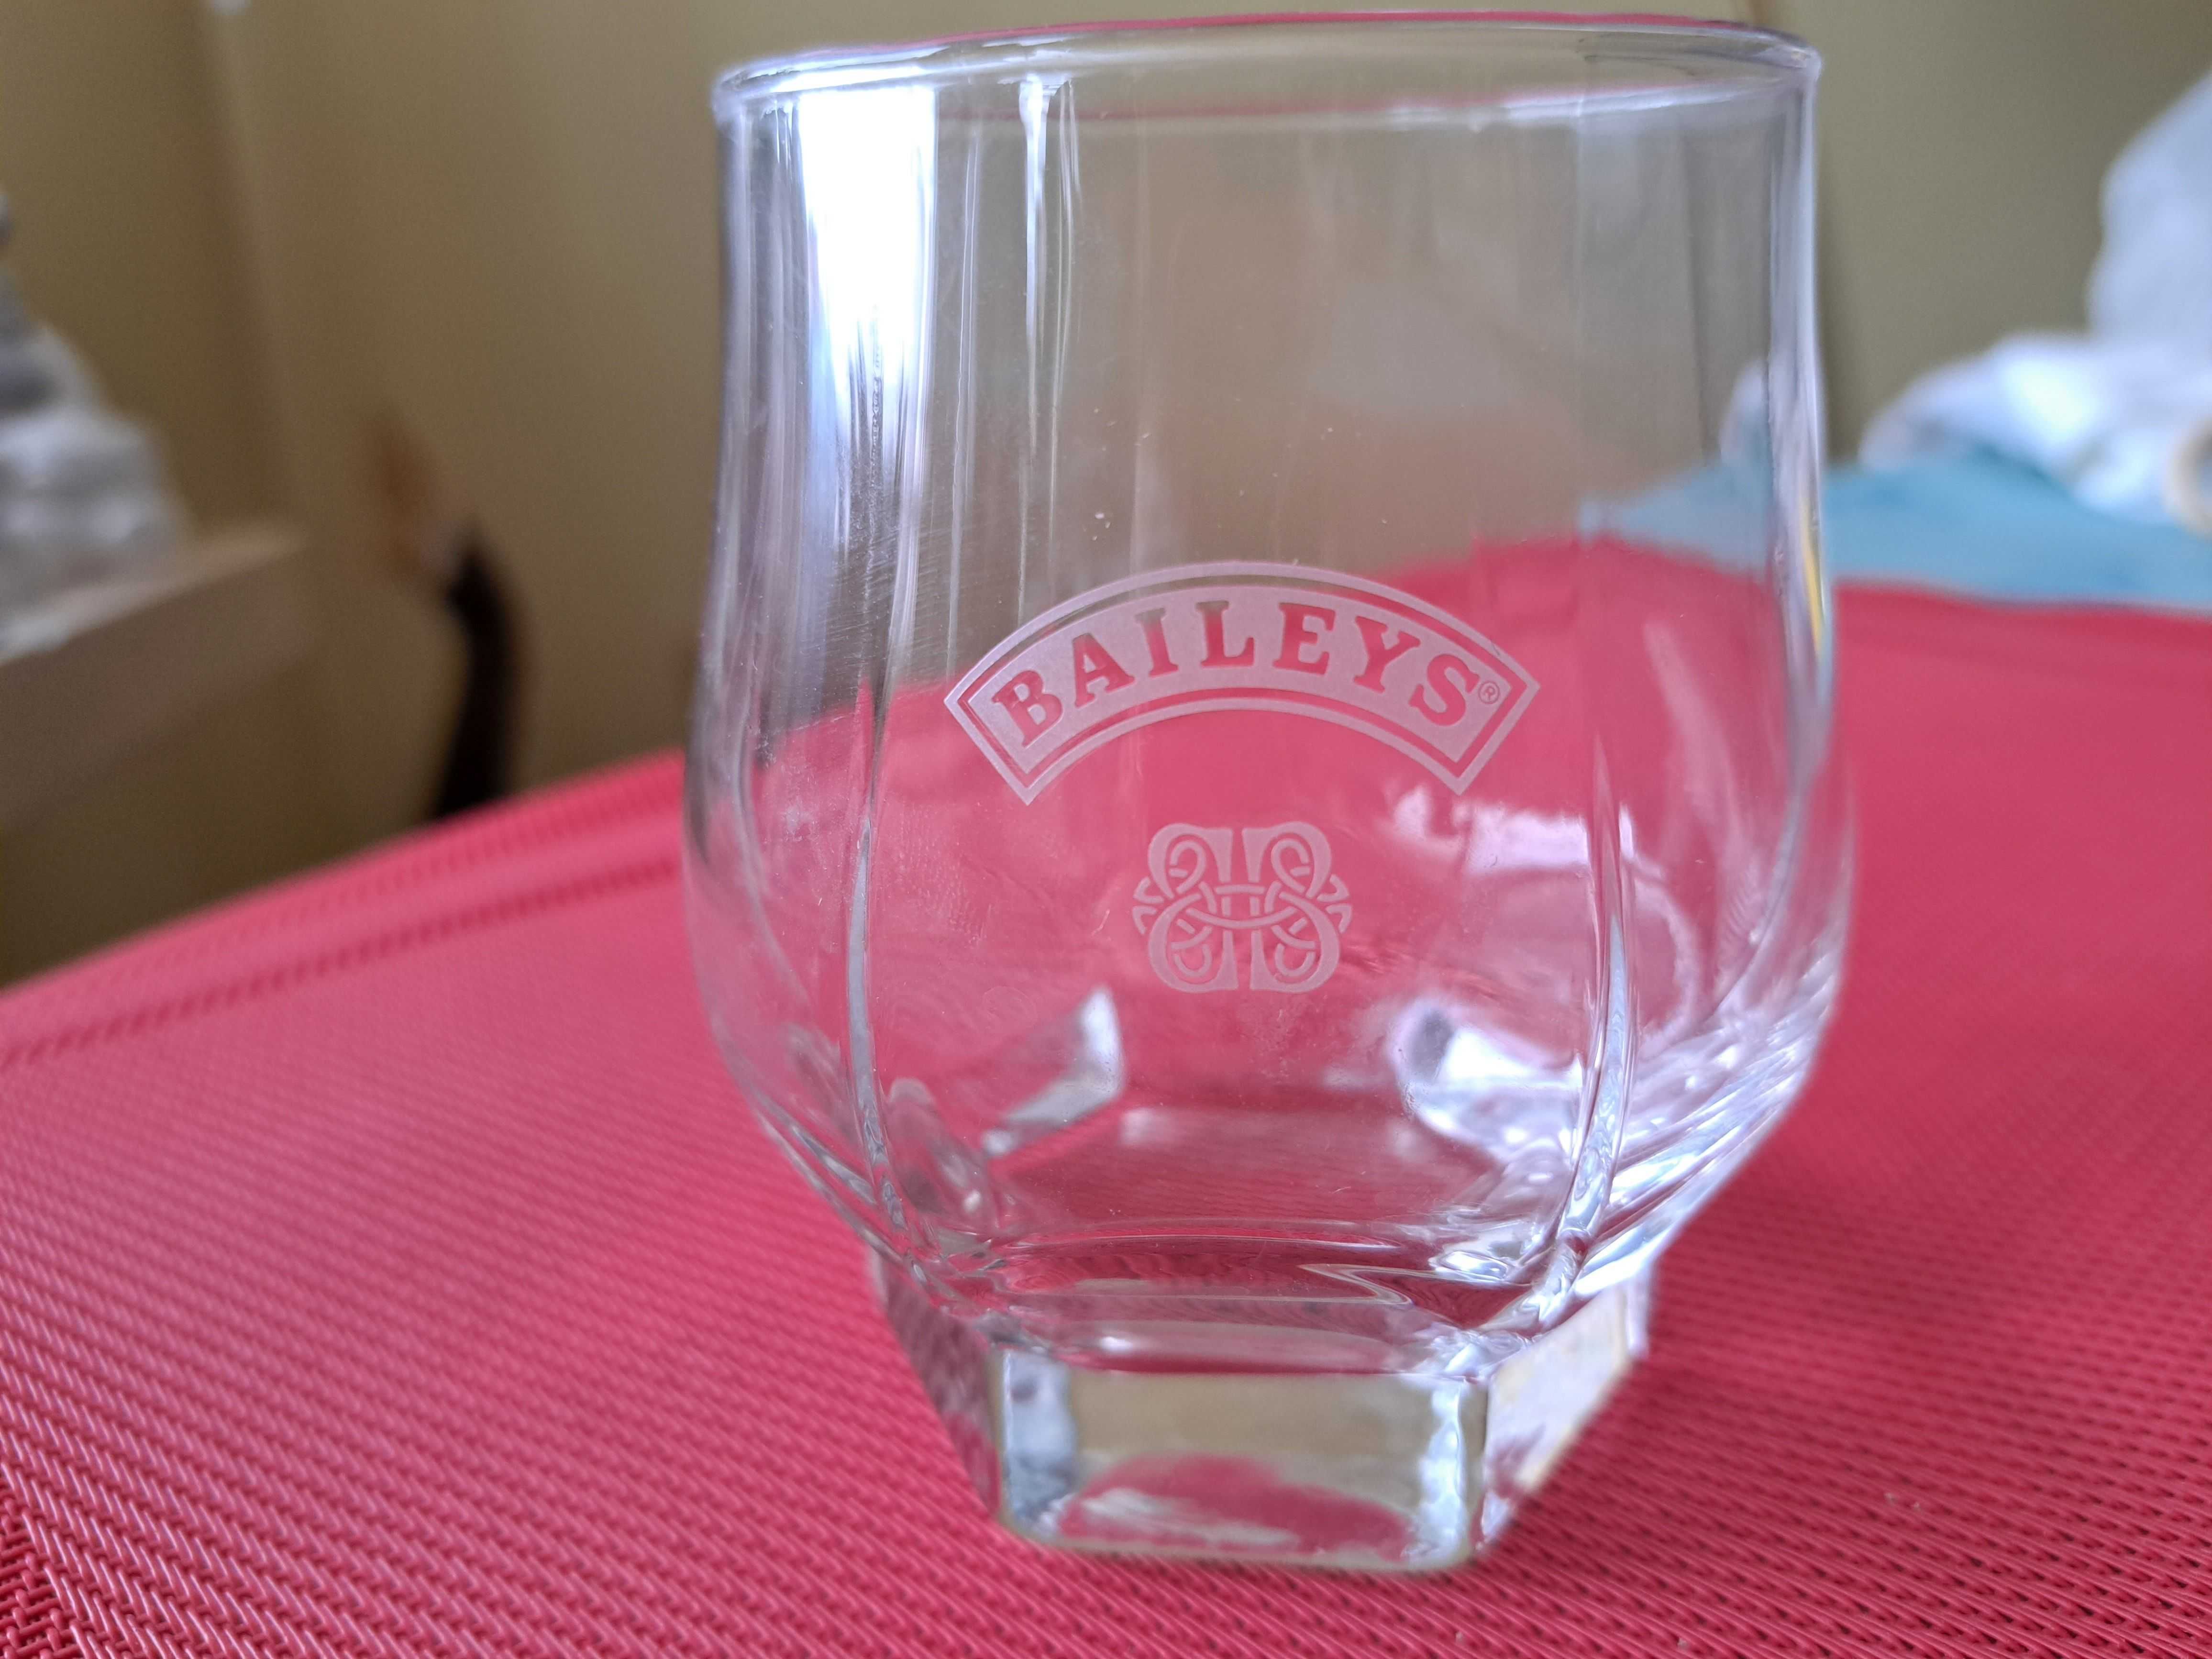 Szklanki szklanka Baileys - stara kolekcjonerska